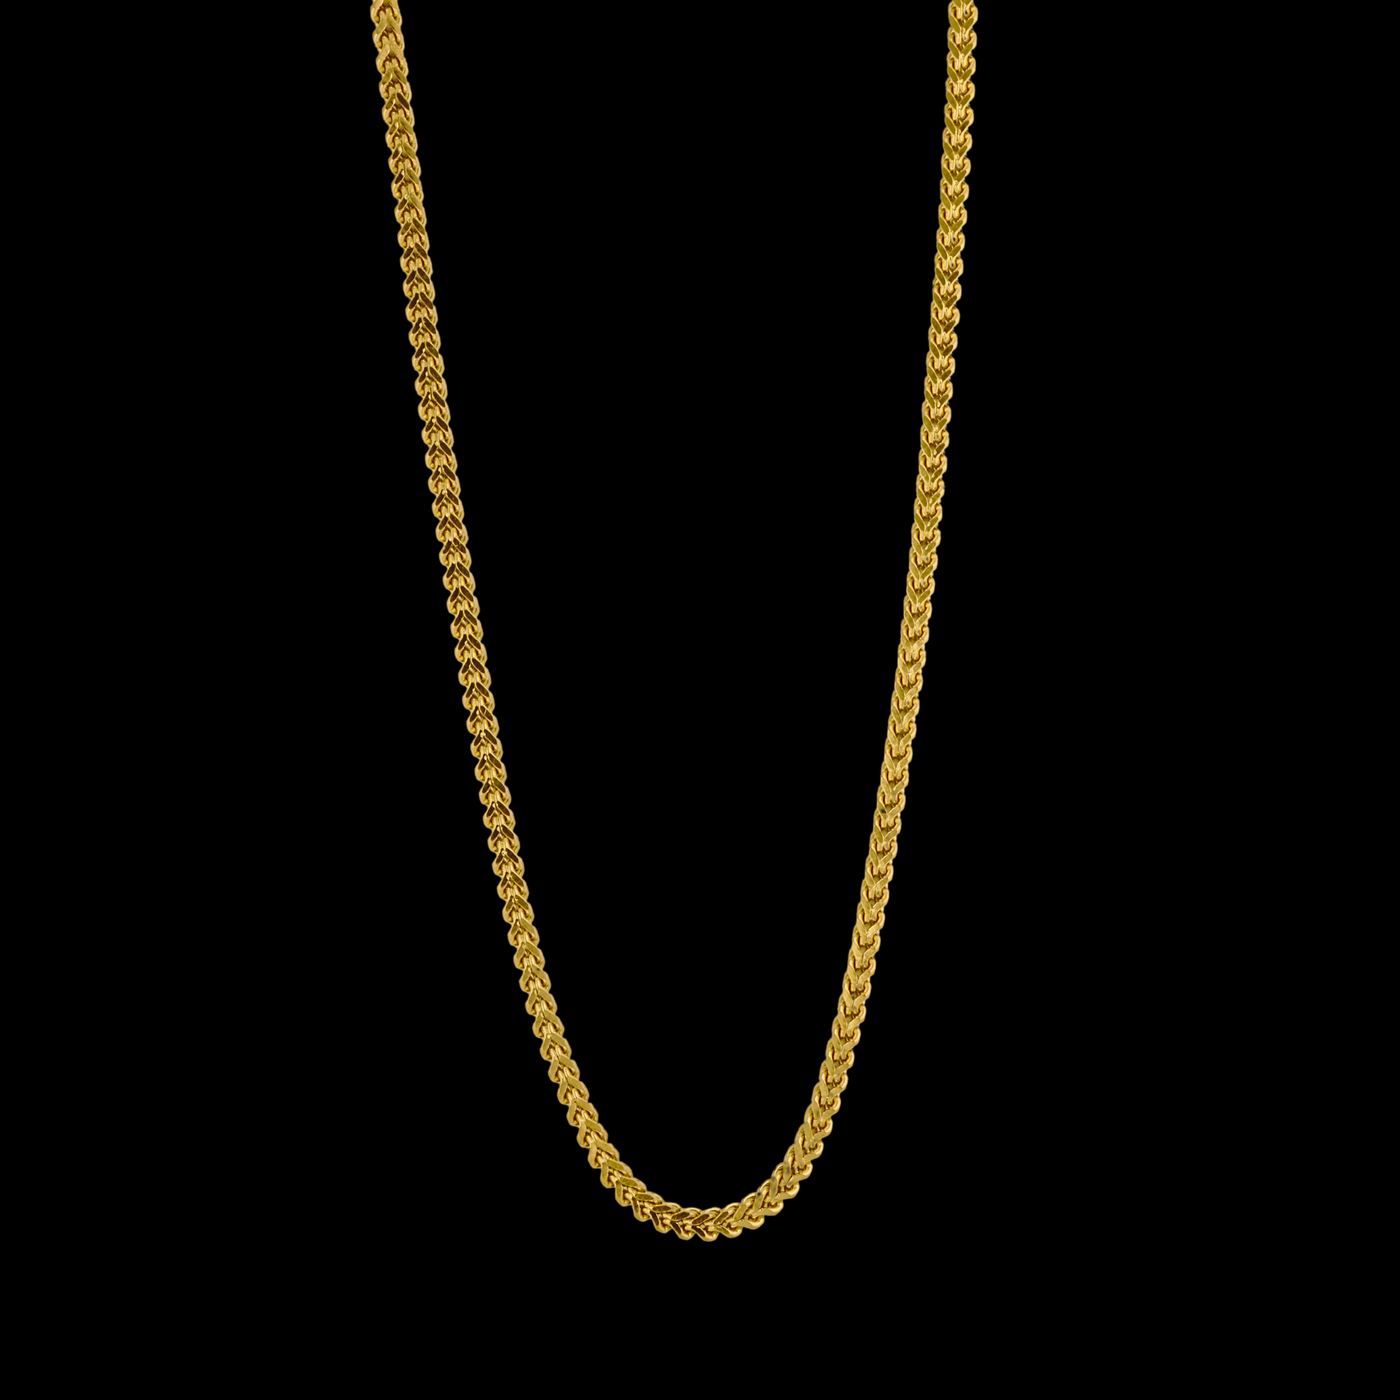 Franco necklace 3 mm (Gold)